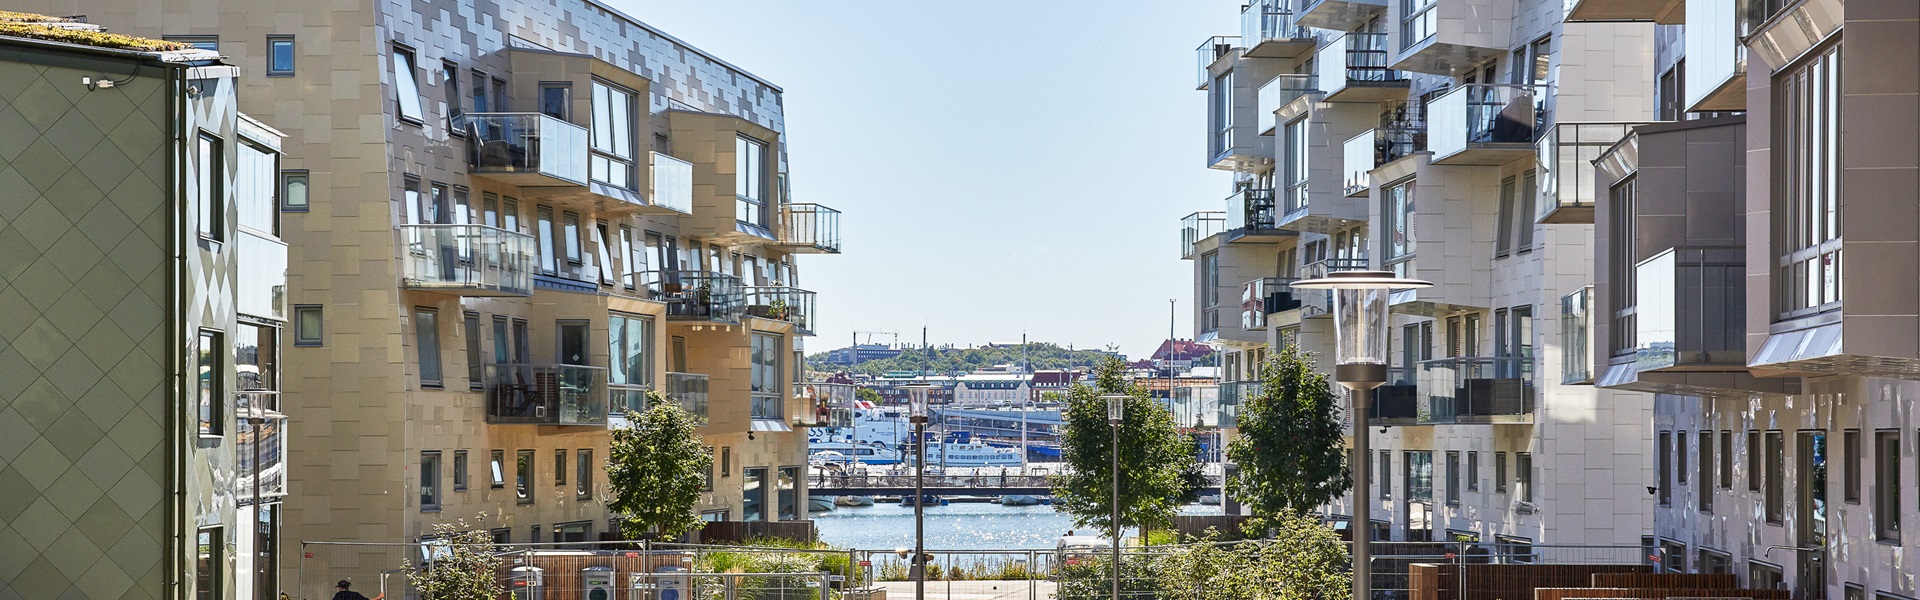 Bo med glittrande vattenvy i Lindholmshamnen